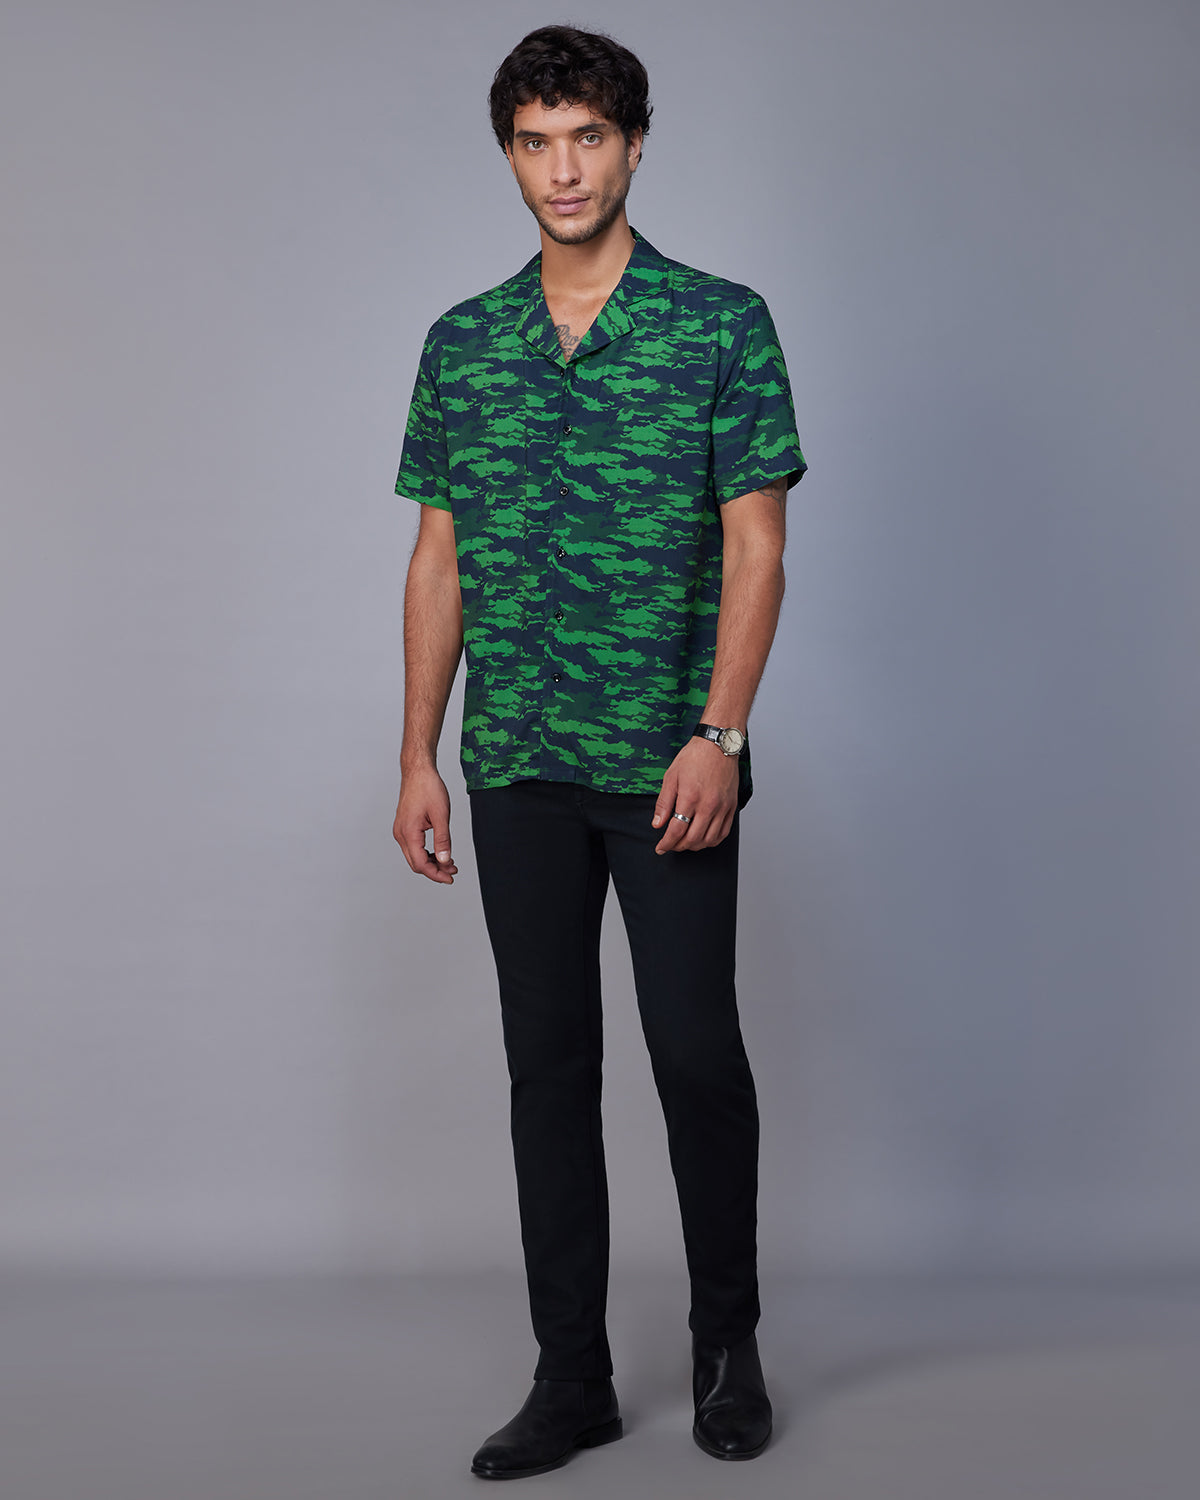 Camo Printed Shirt - Green